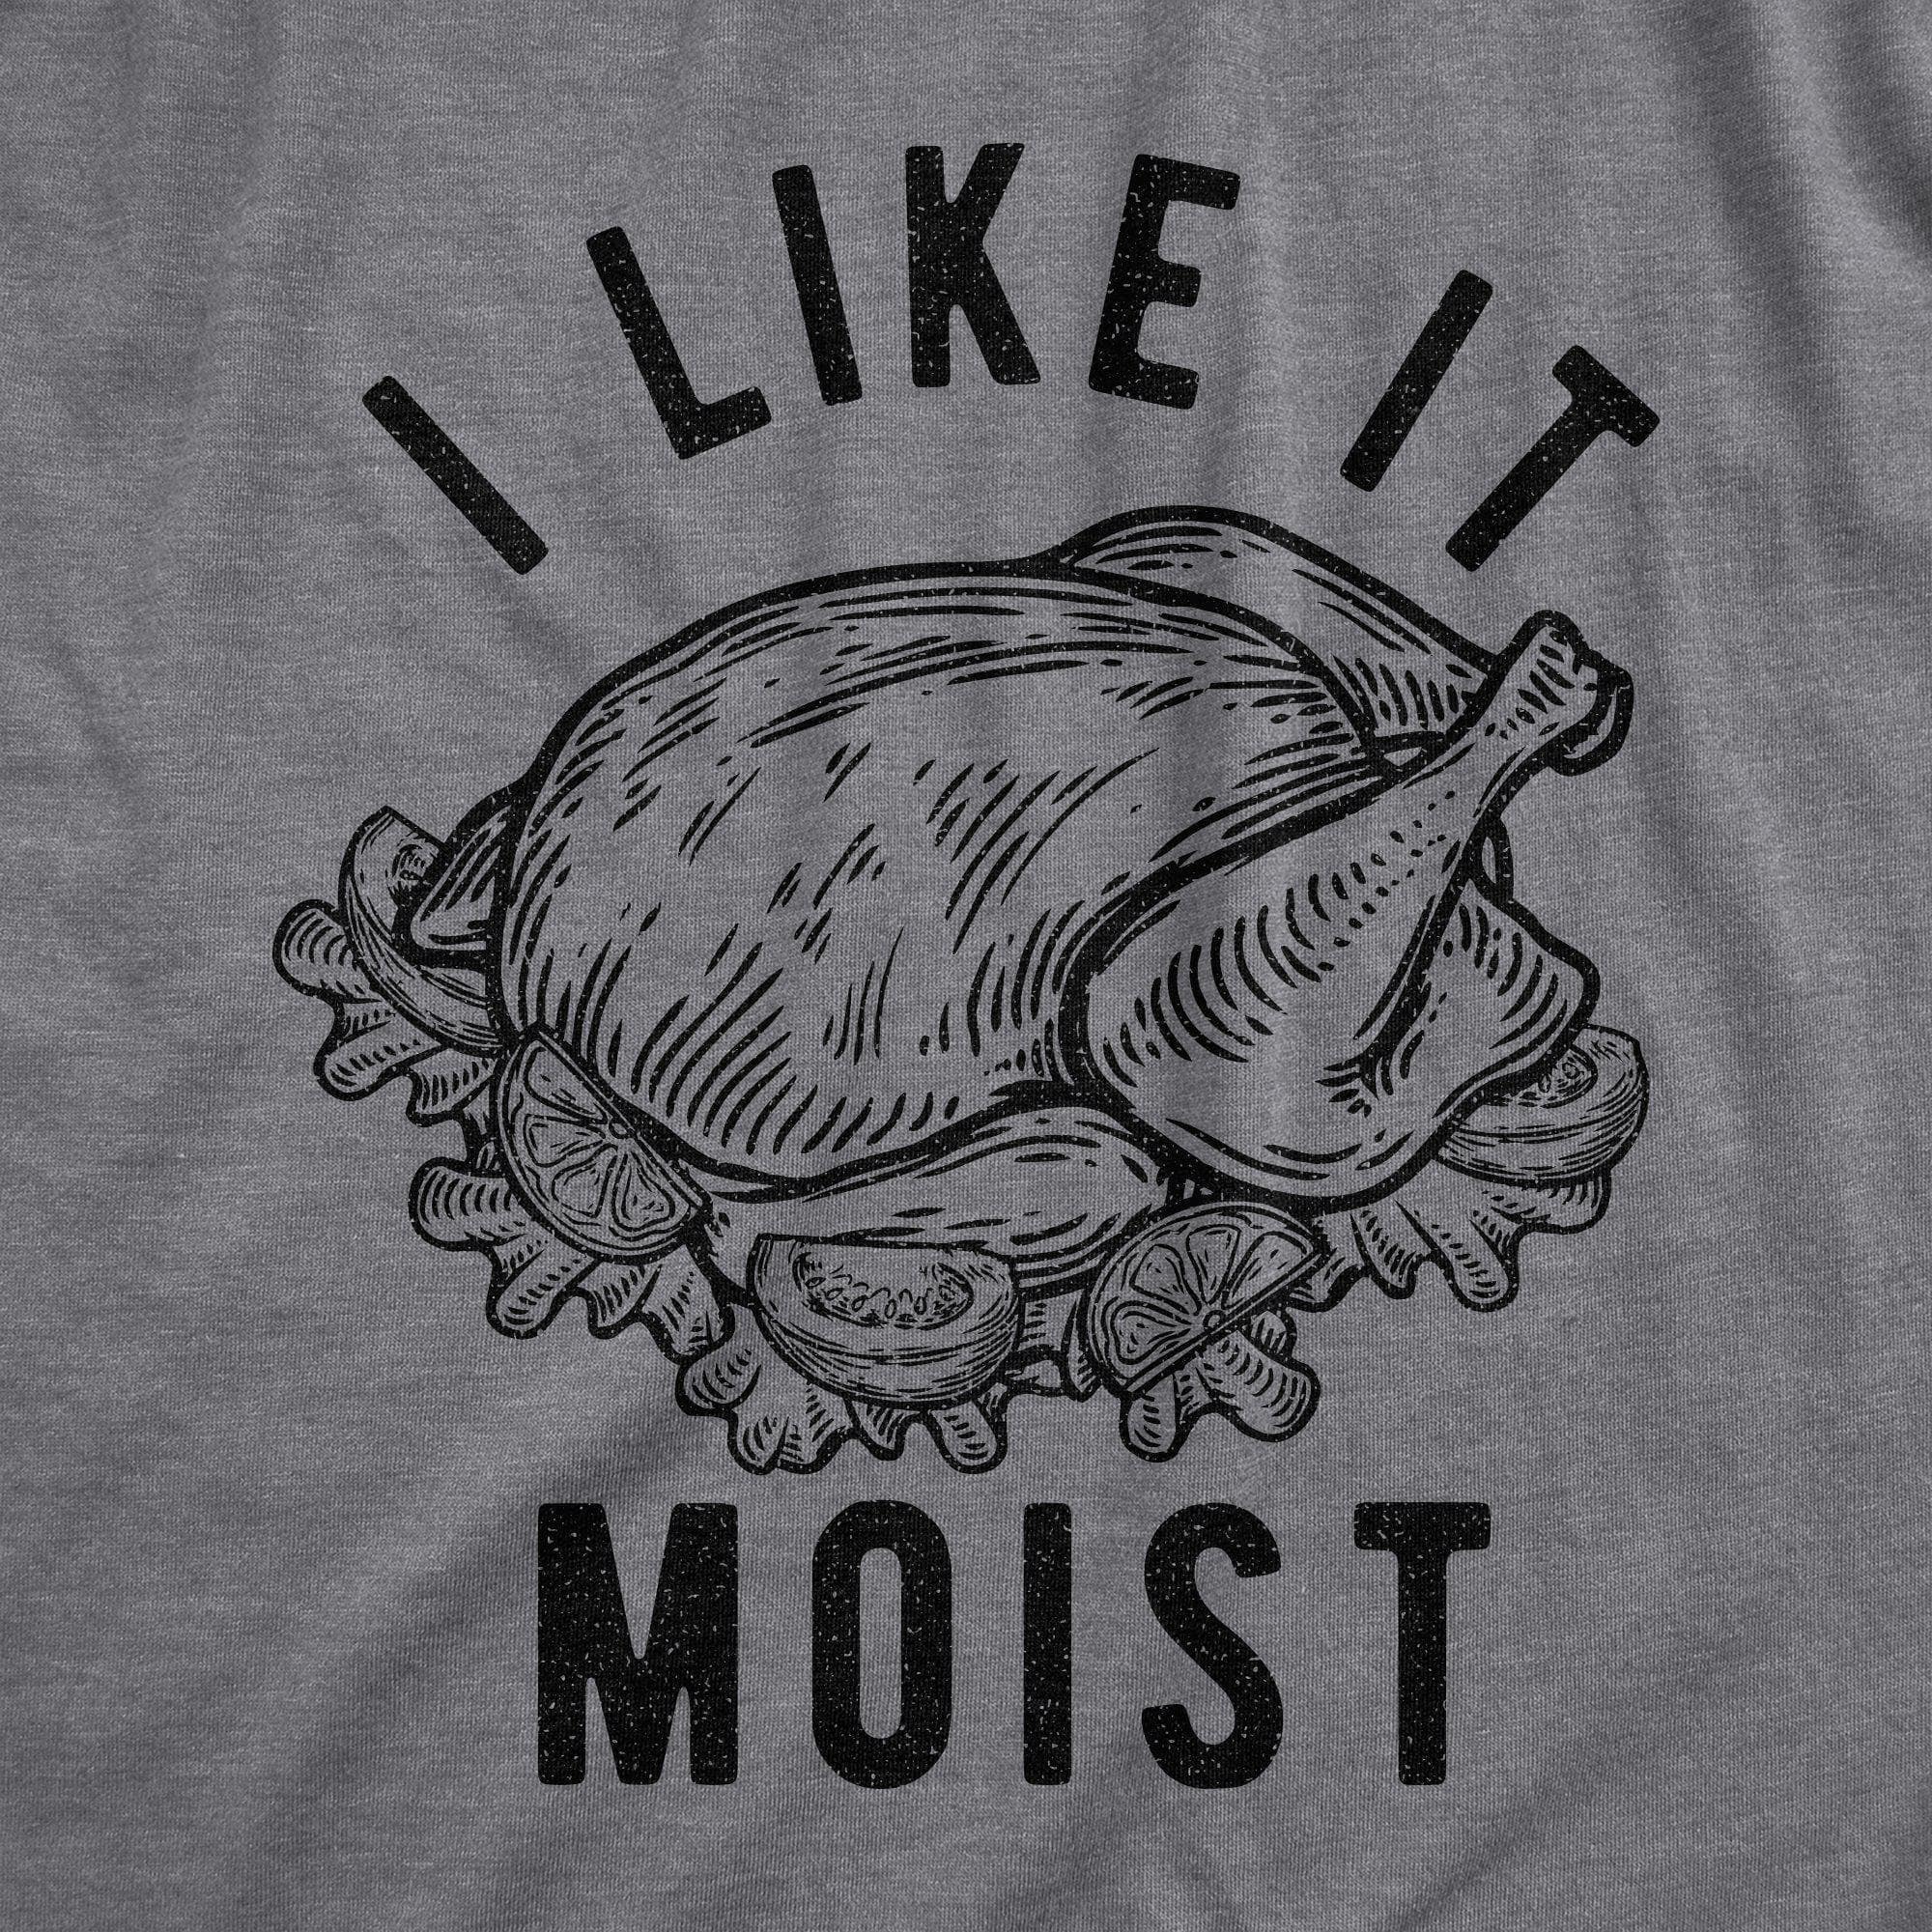 I Like It Moist Men's Tshirt - Crazy Dog T-Shirts